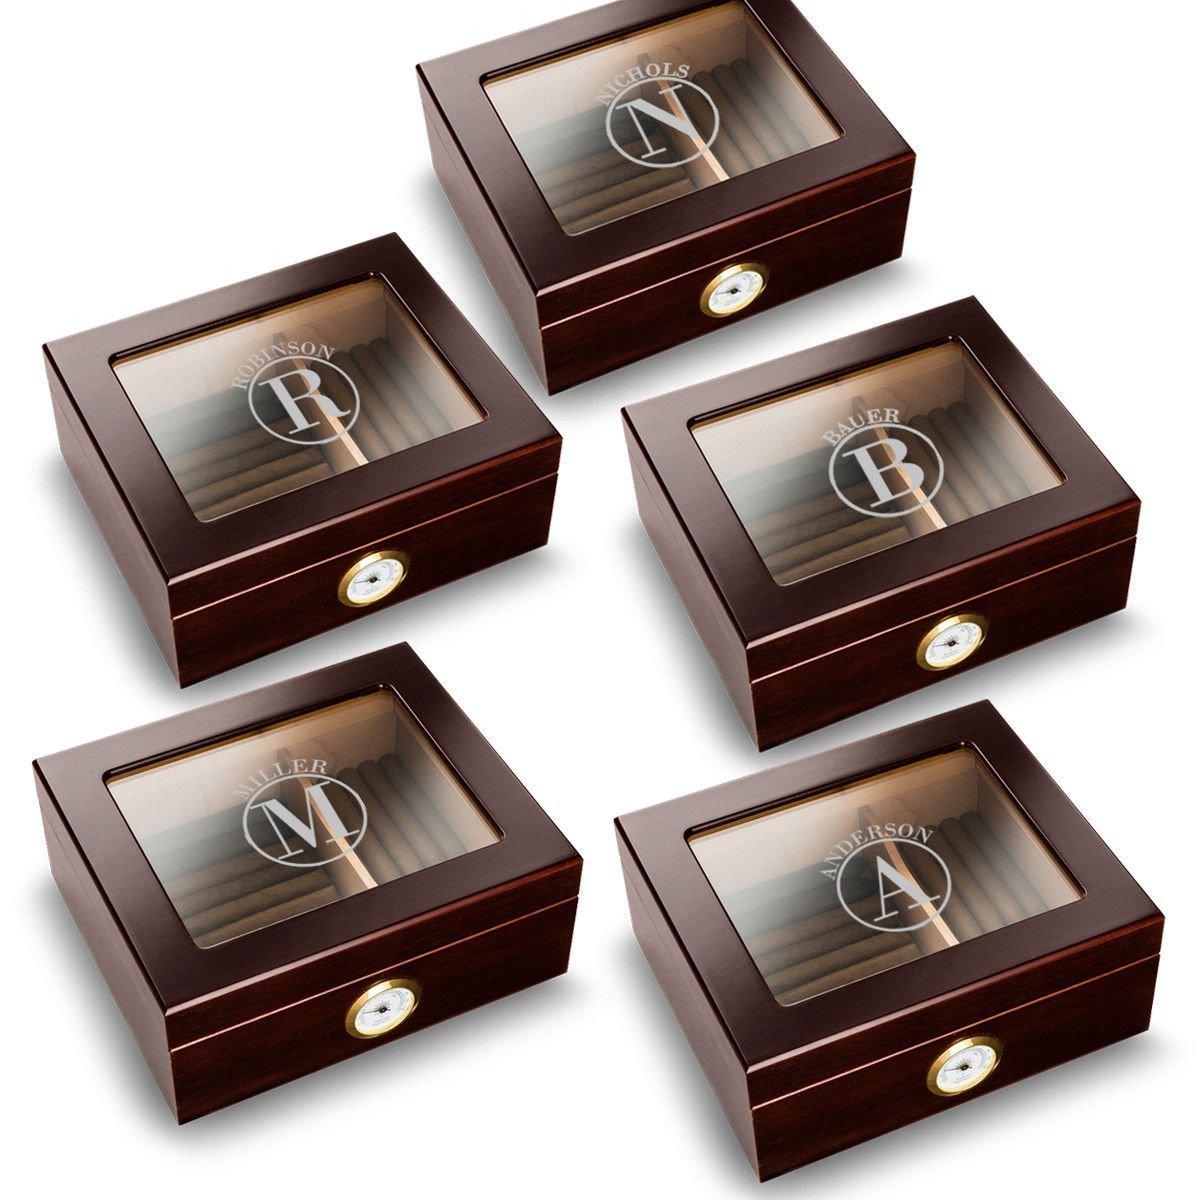 Buy Personalized Trinidad Glass Top Mahogany Humidors - Set of 5